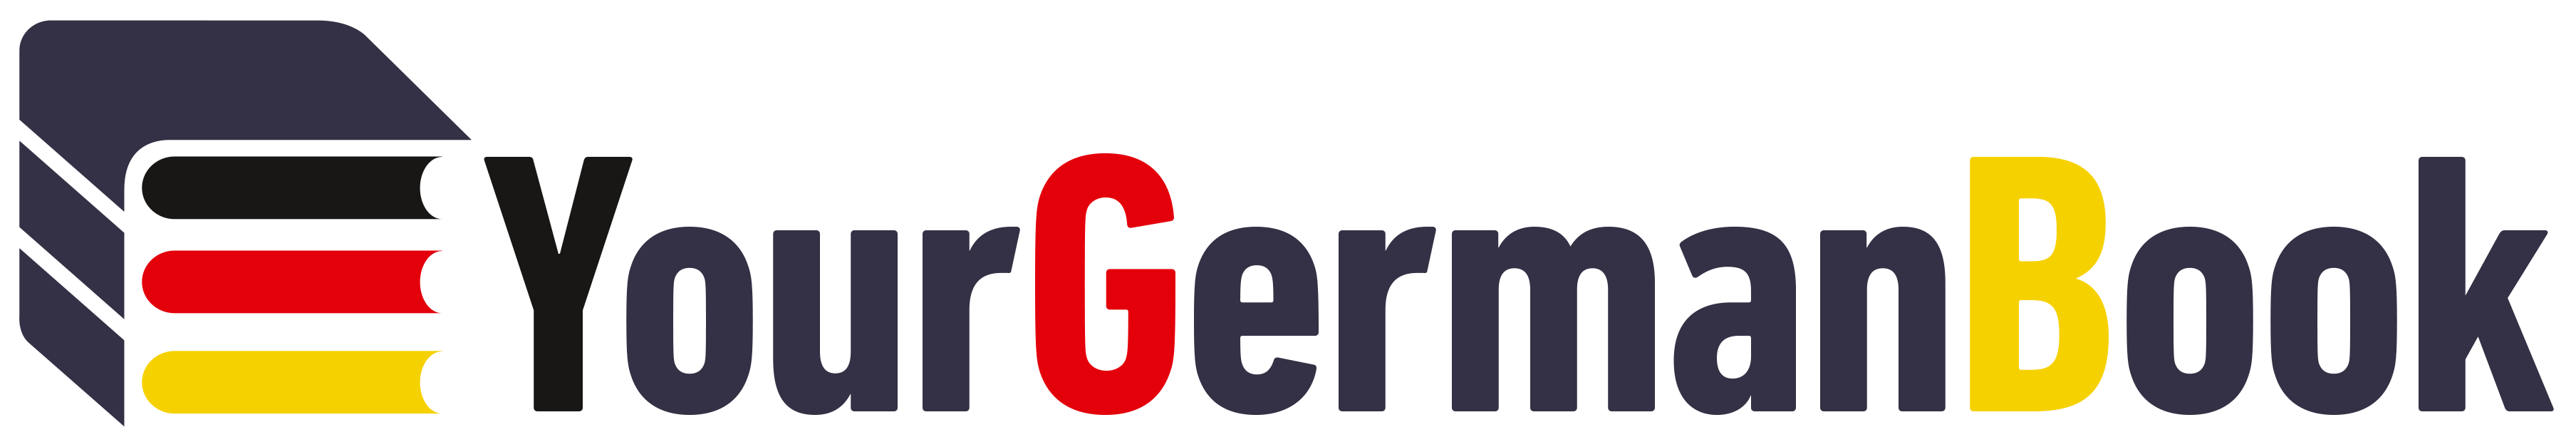 Your german book logo